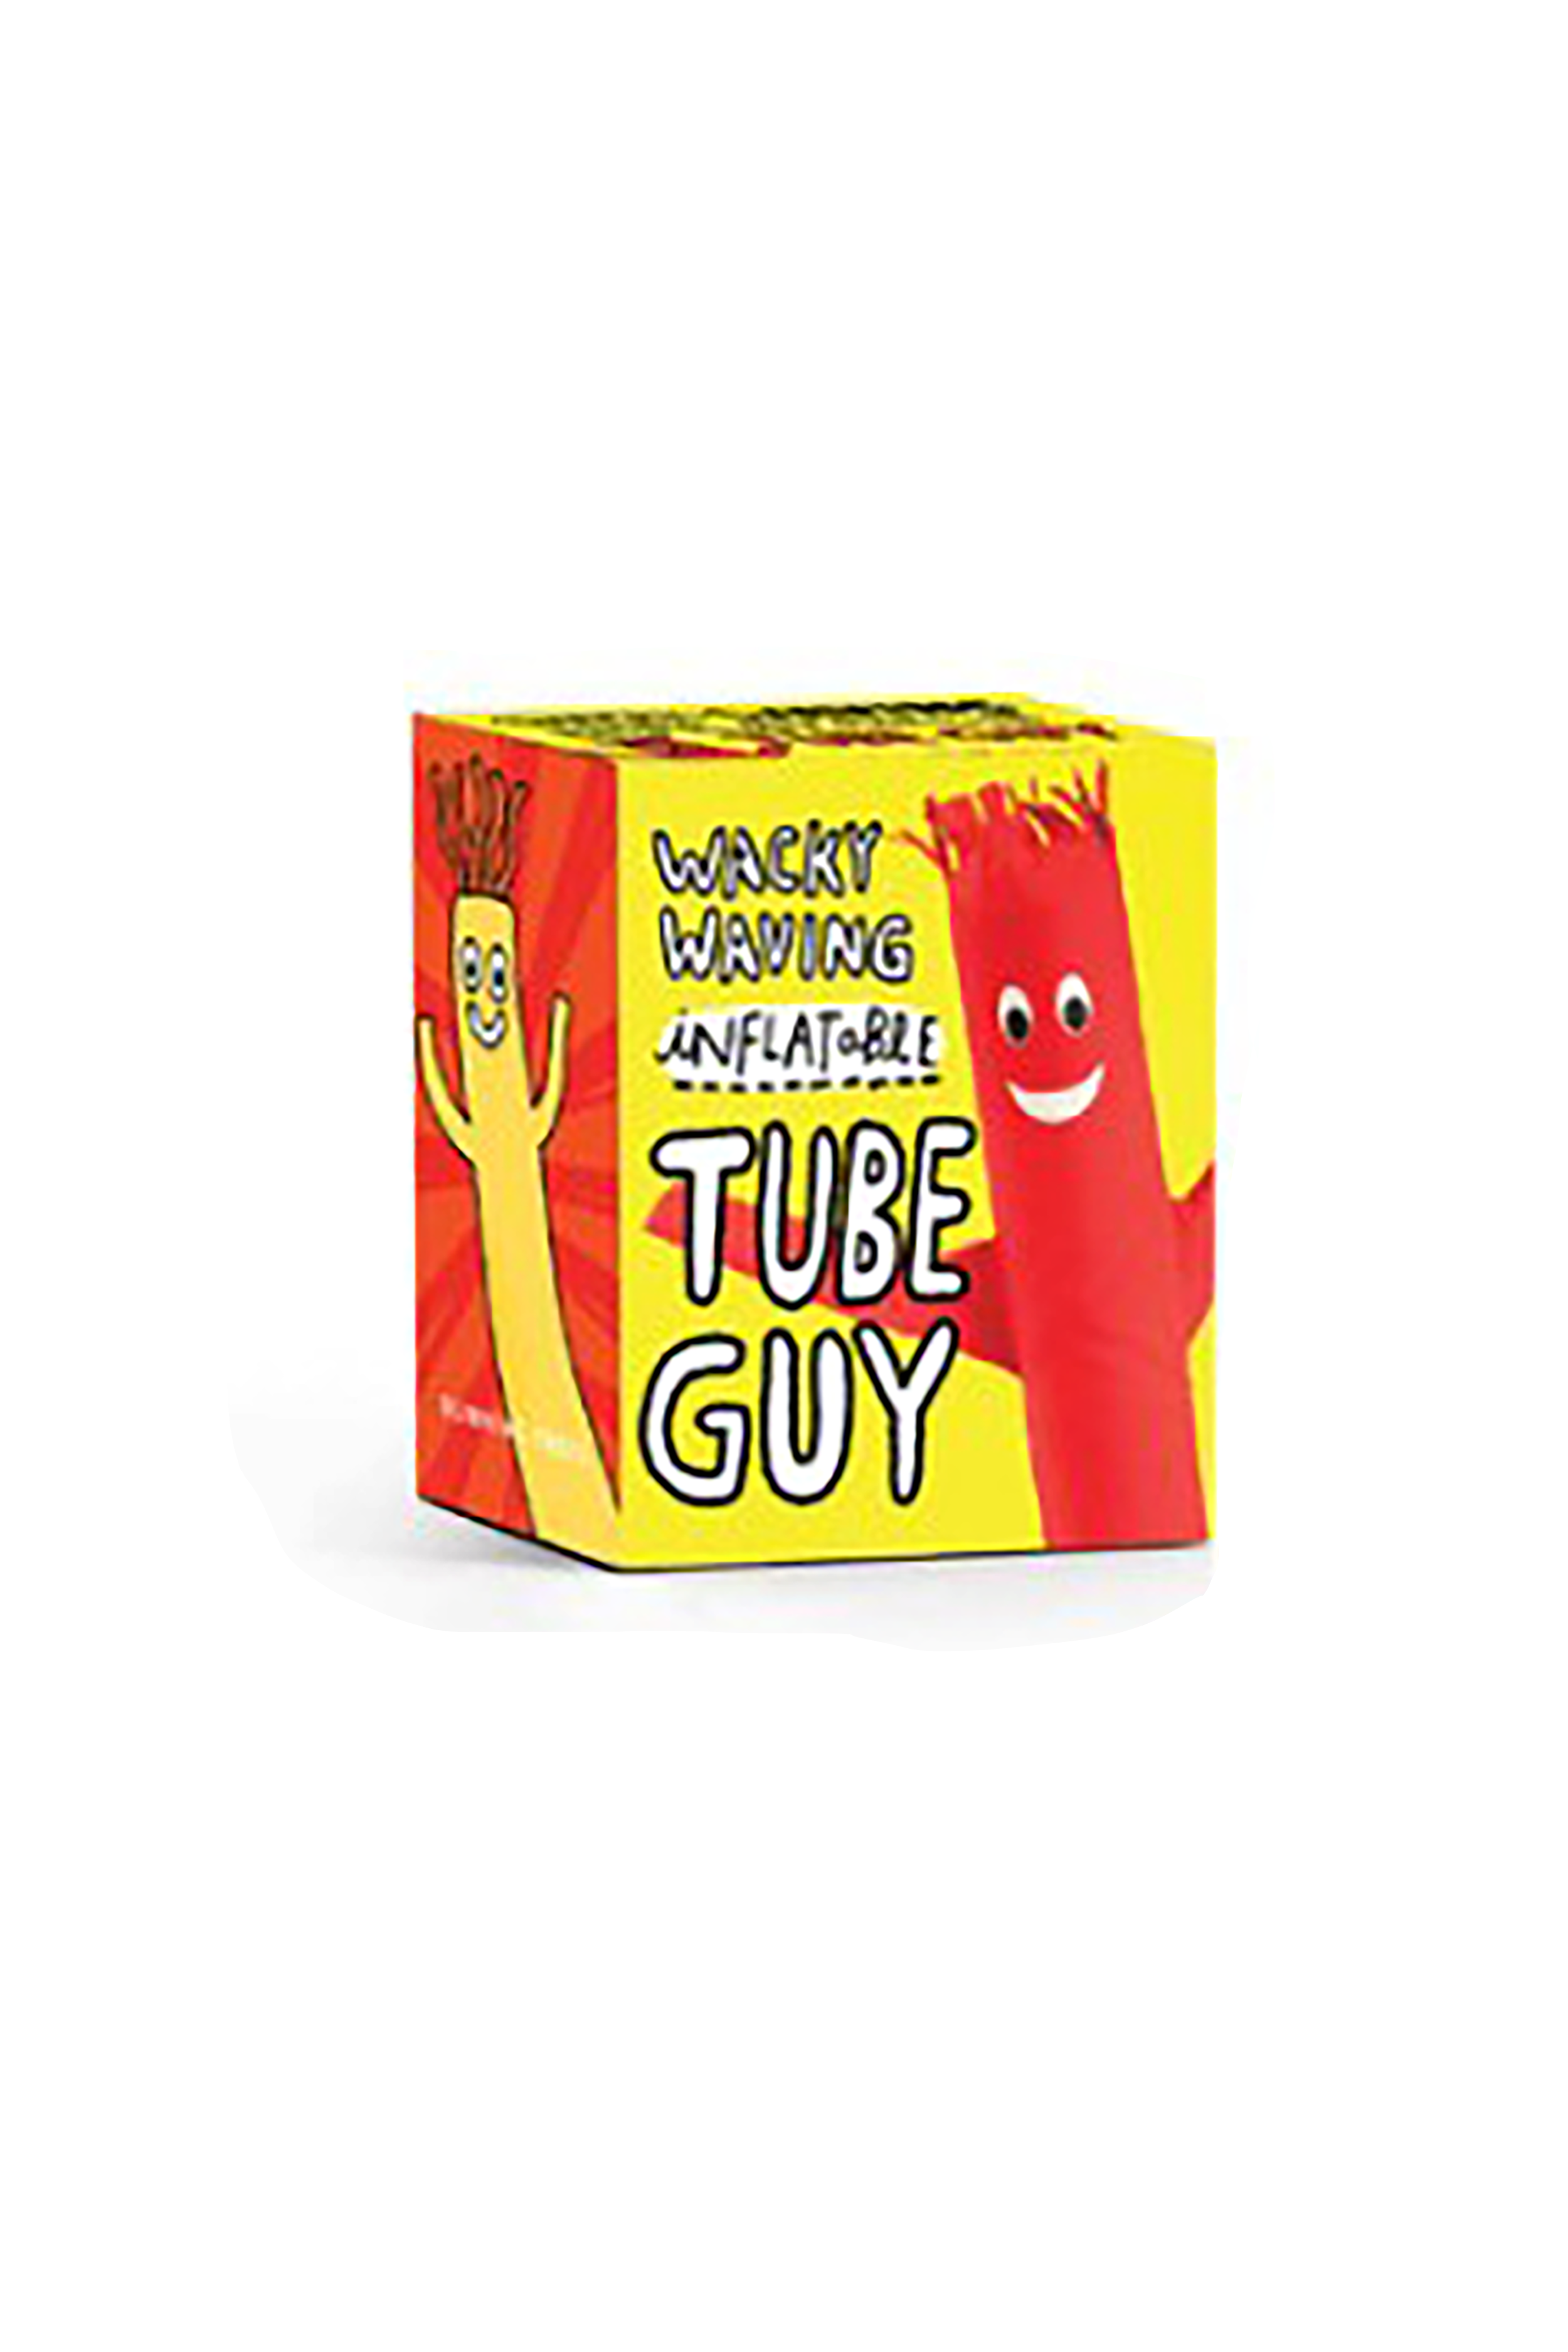 Wacky Waving Inflatable Tube Guy